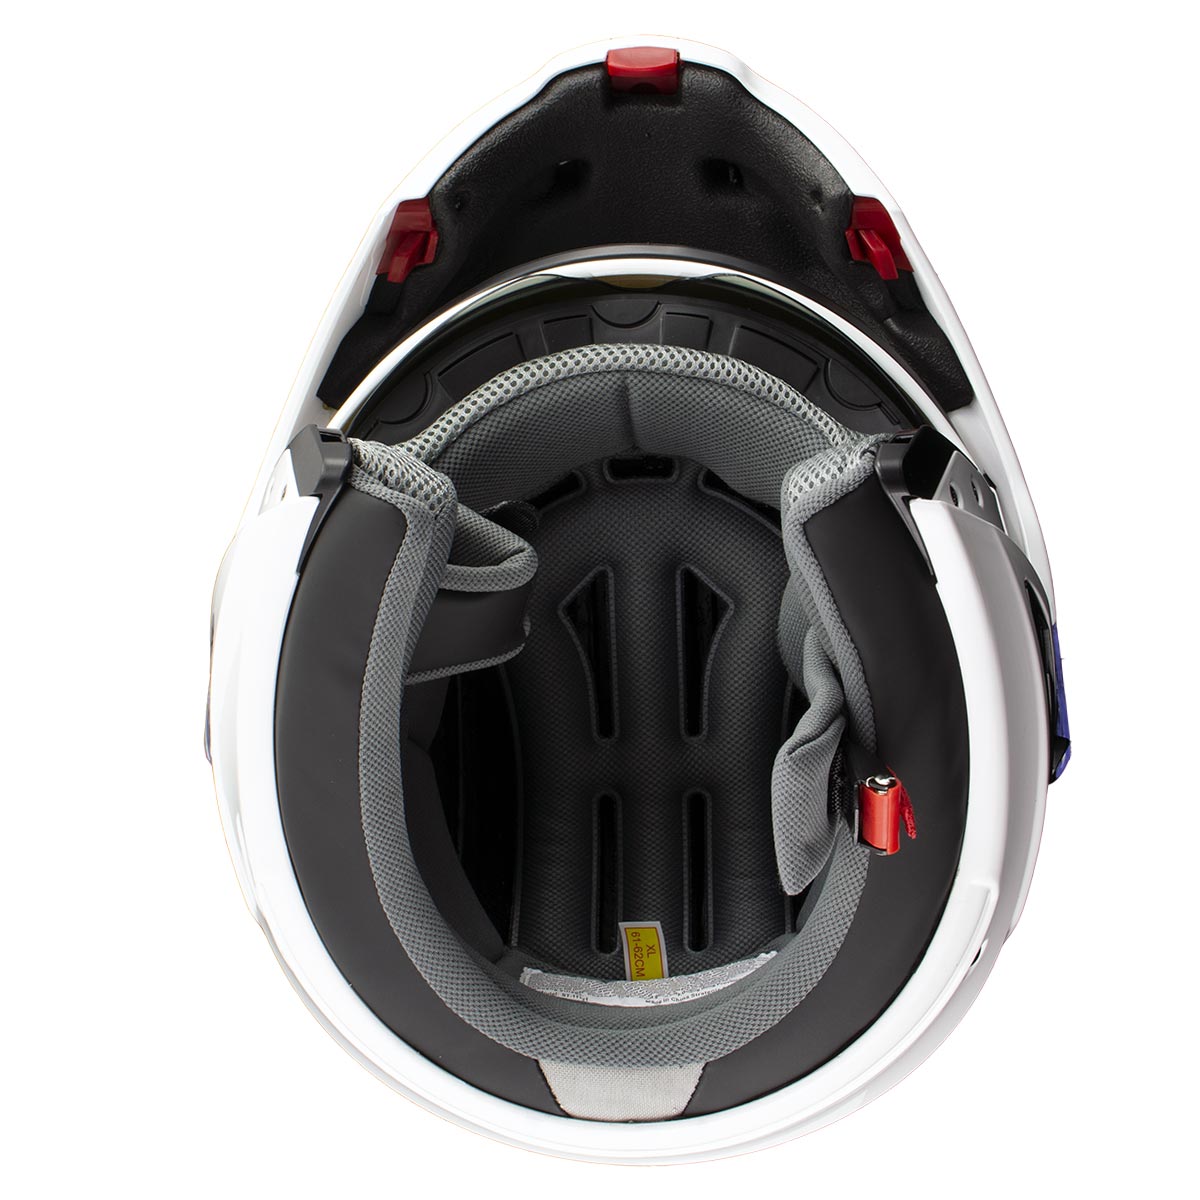 Hawk 'FX' ST11121 10WG White Modular Motorcycle Helmet